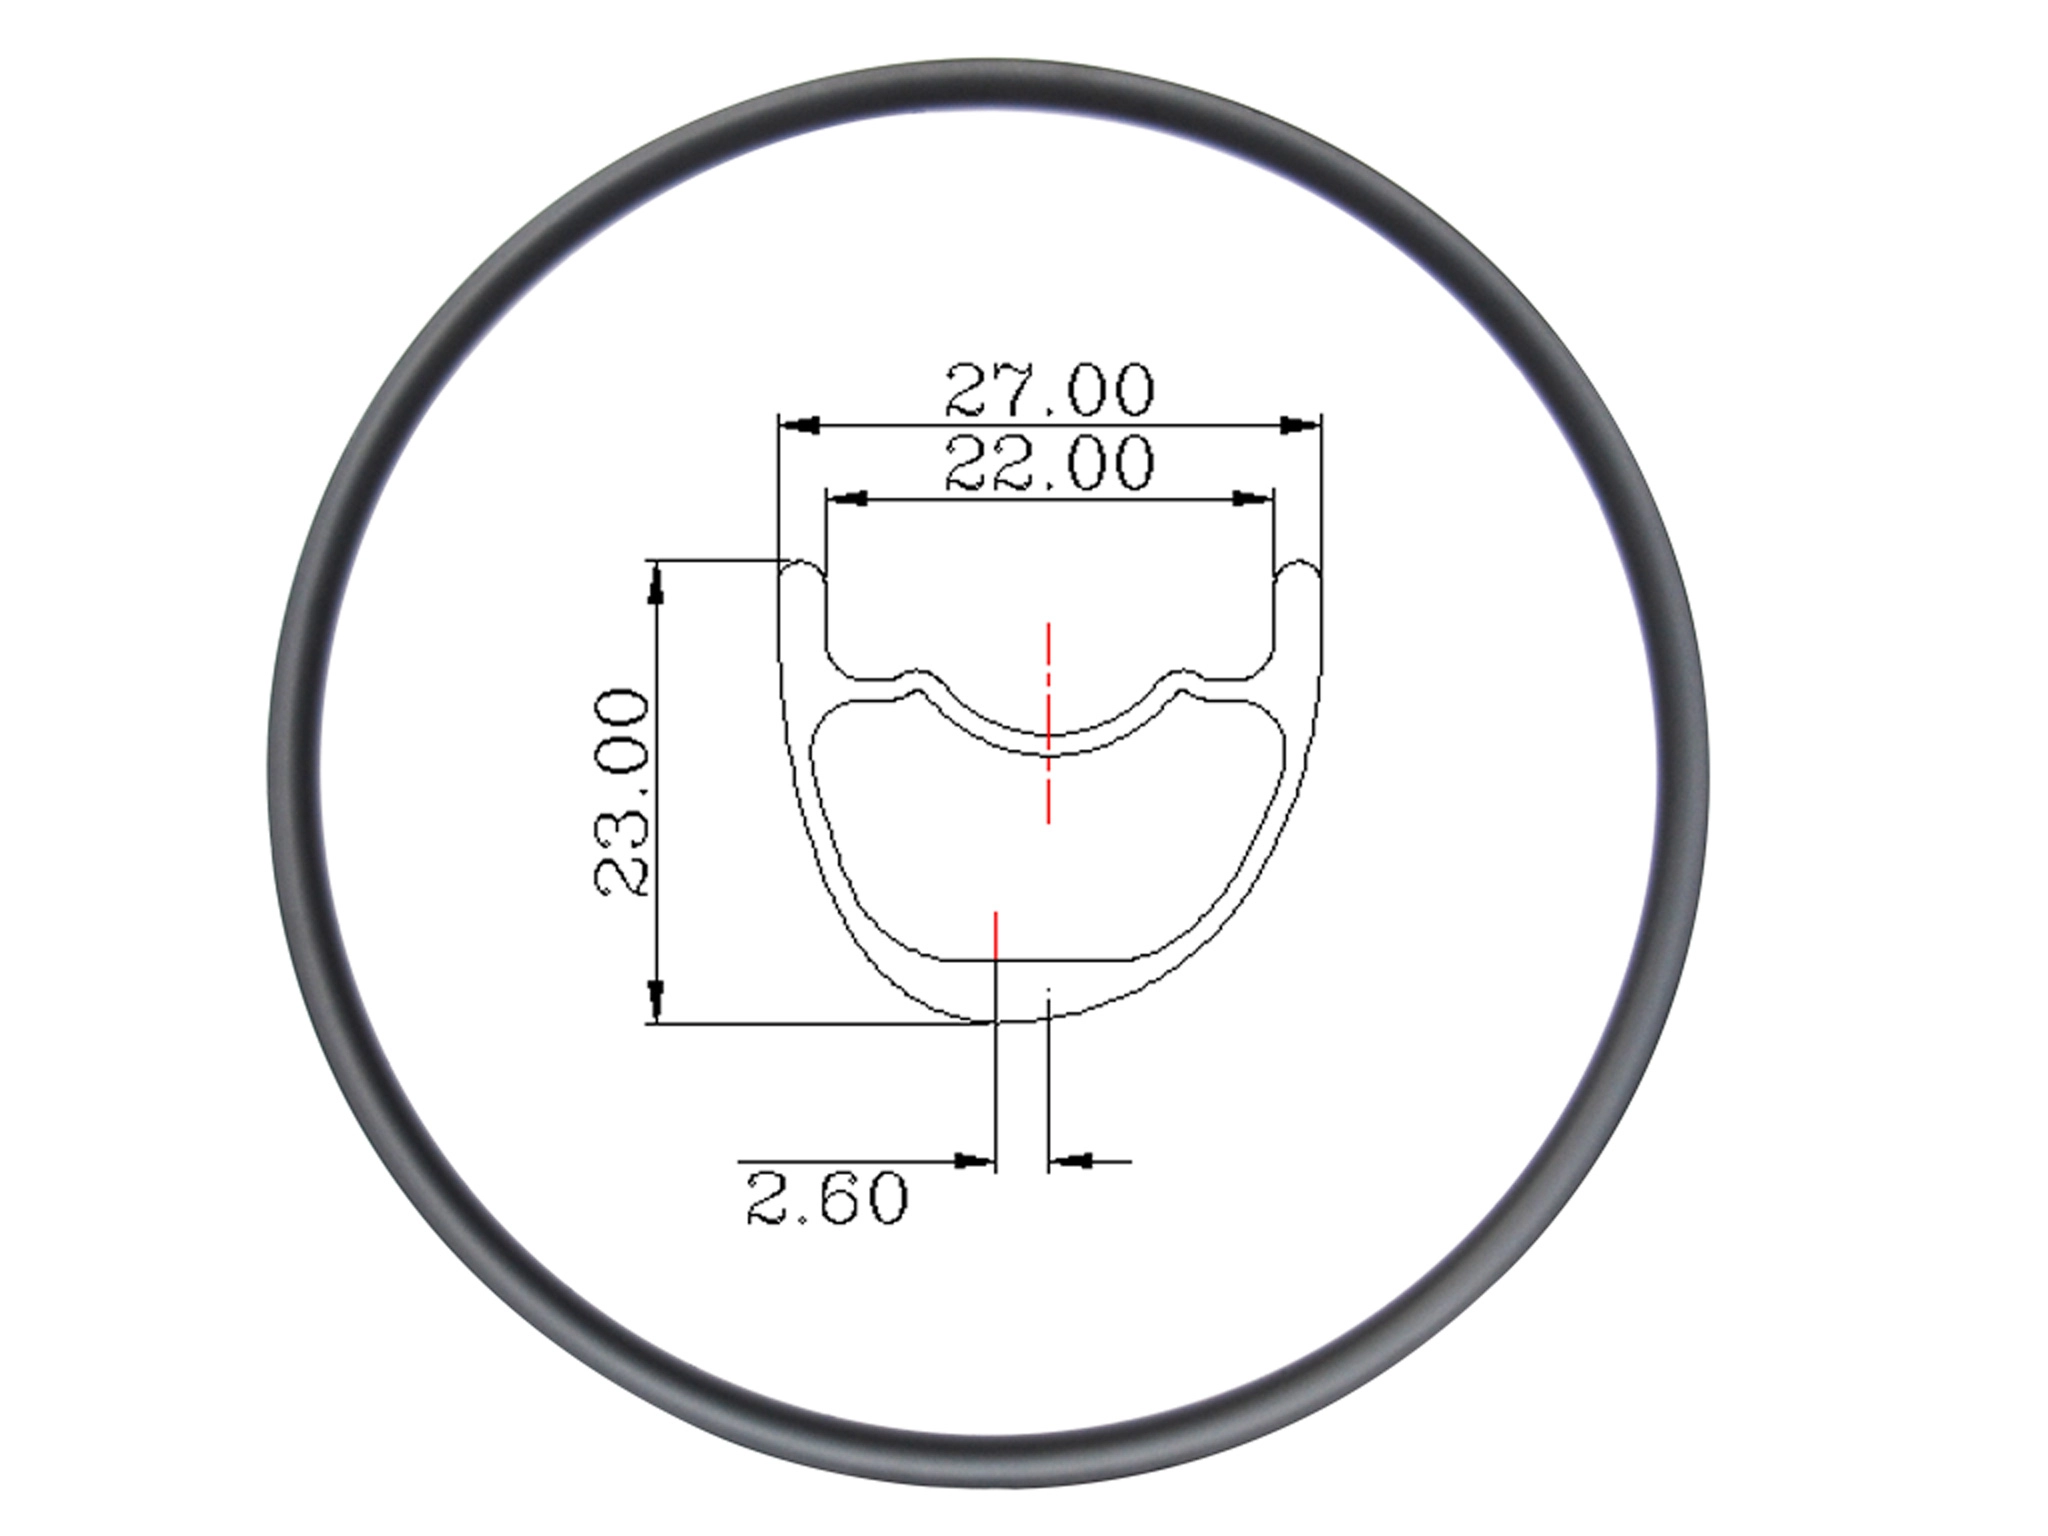 Cerchi asimmetrici da 27 mm di larghezza 25 mm di profondità Cerchi in carbonio XC leggeri